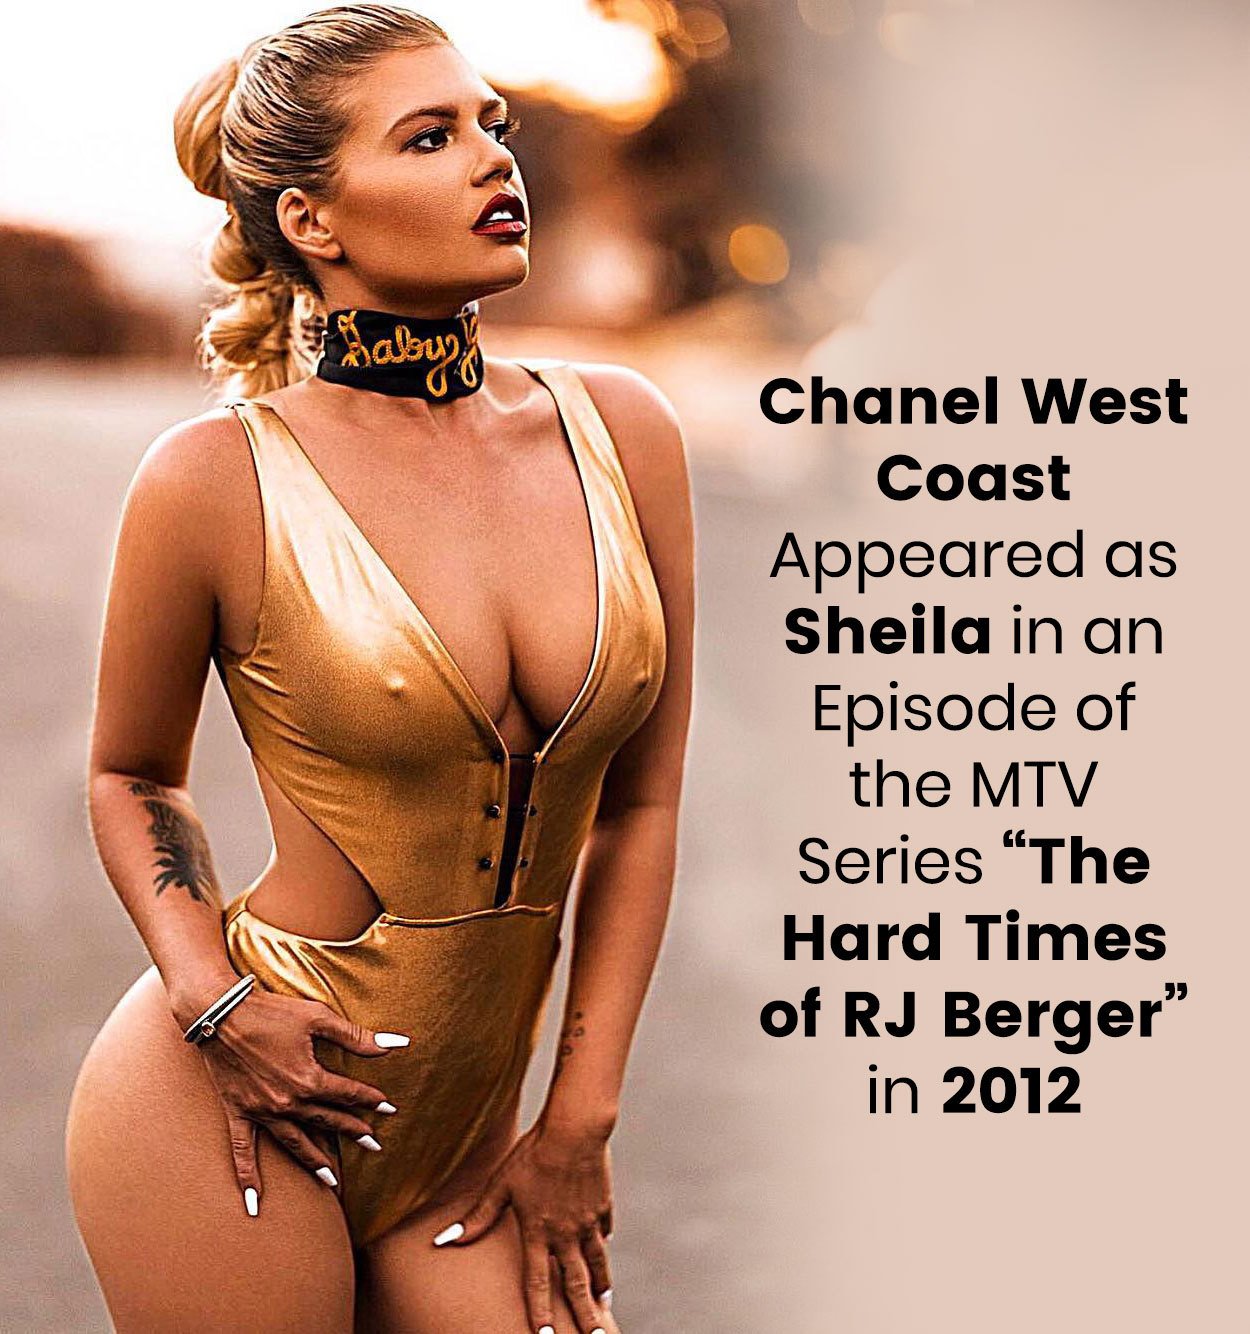 Chanel West Coast appeared as sheila